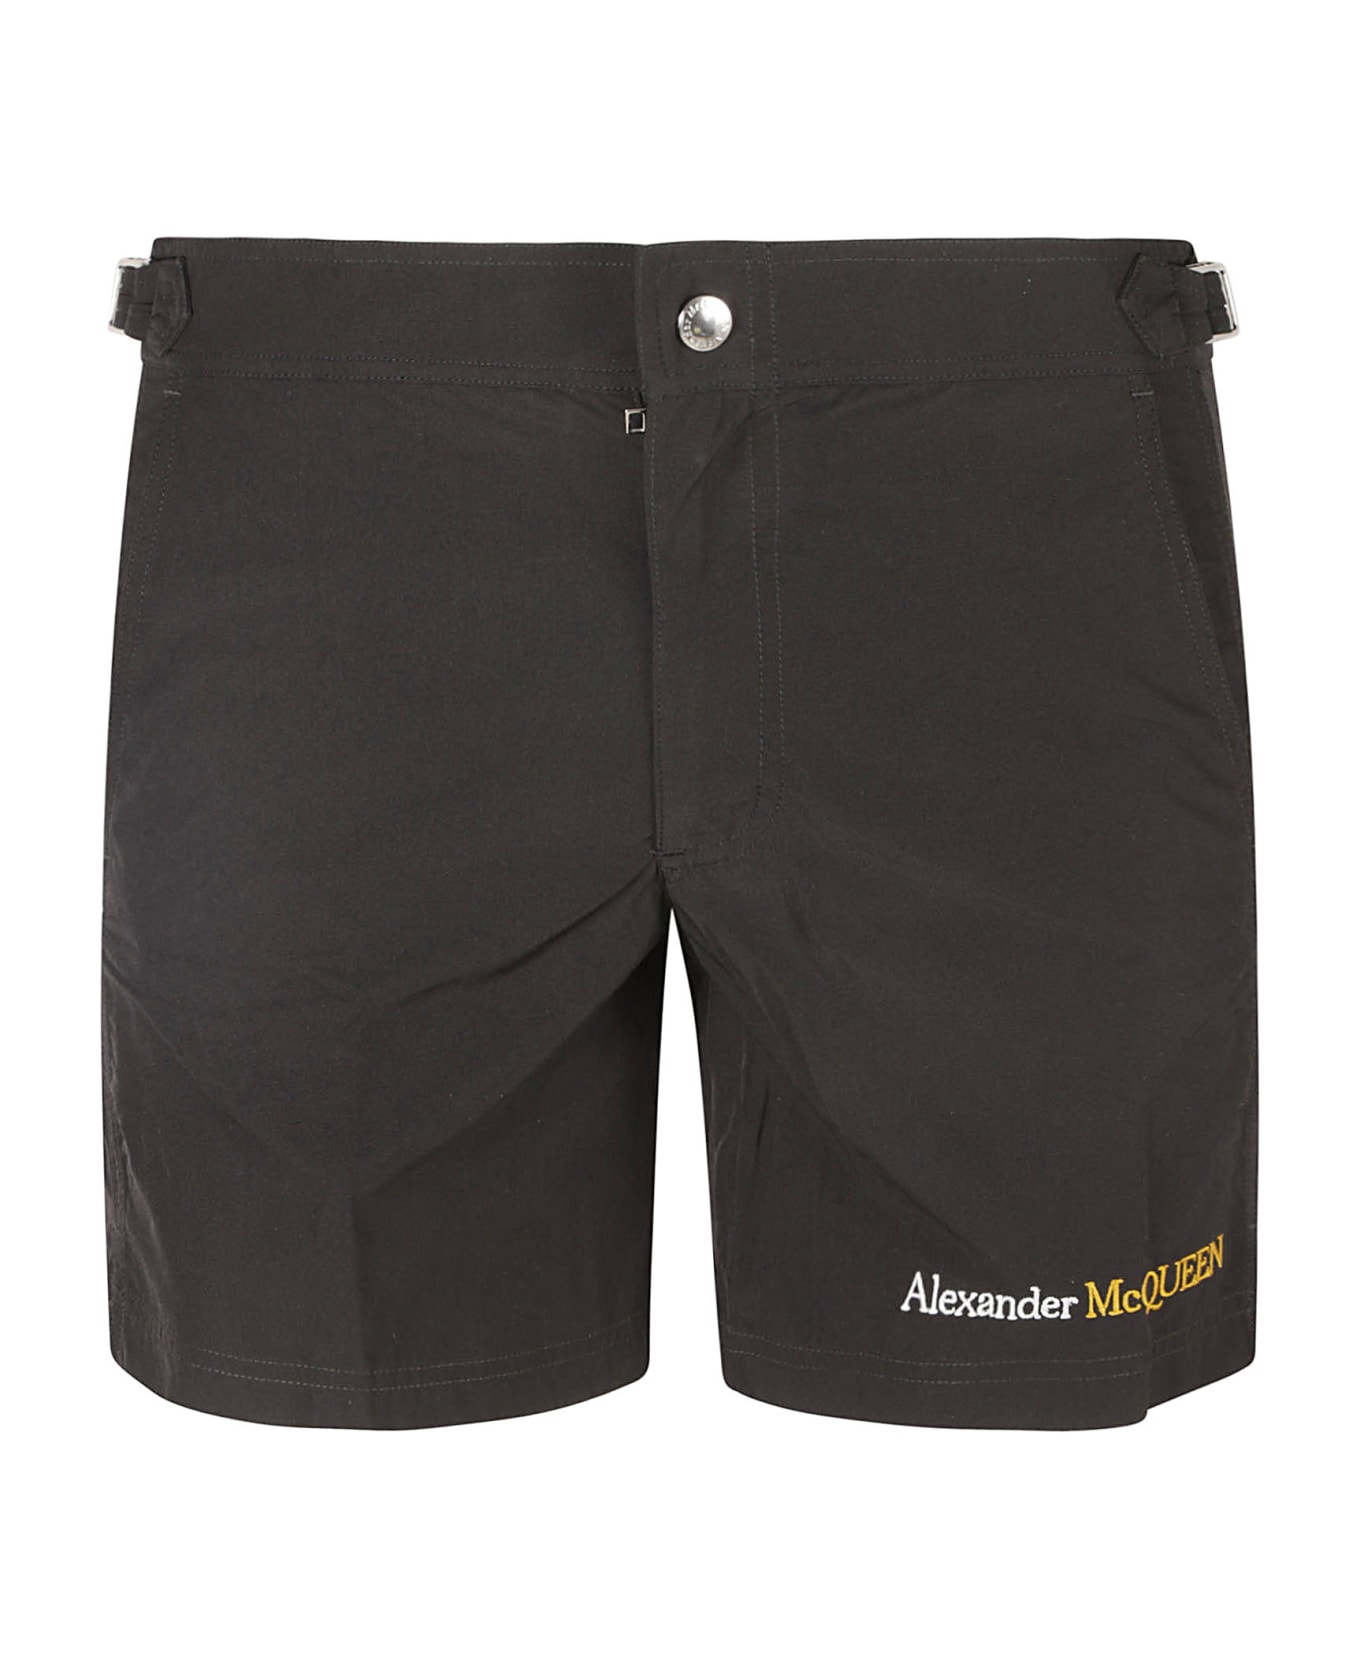 Alexander McQueen Swimming Shorts - Black/Gold